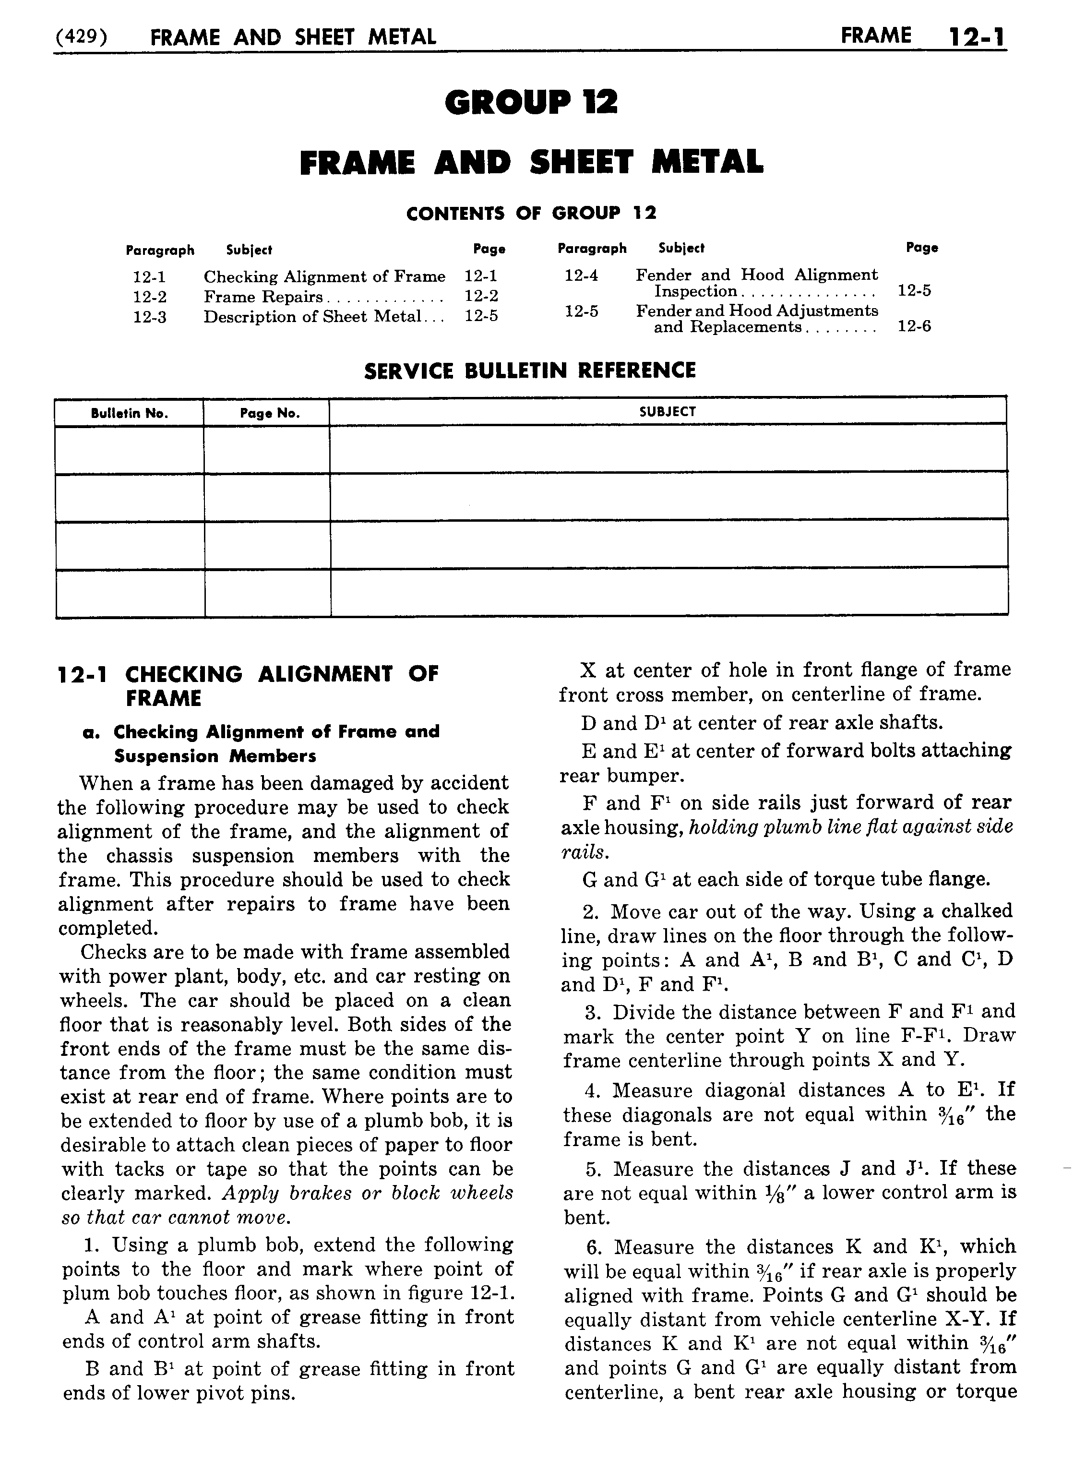 n_13 1954 Buick Shop Manual - Sheet Metal-001-001.jpg